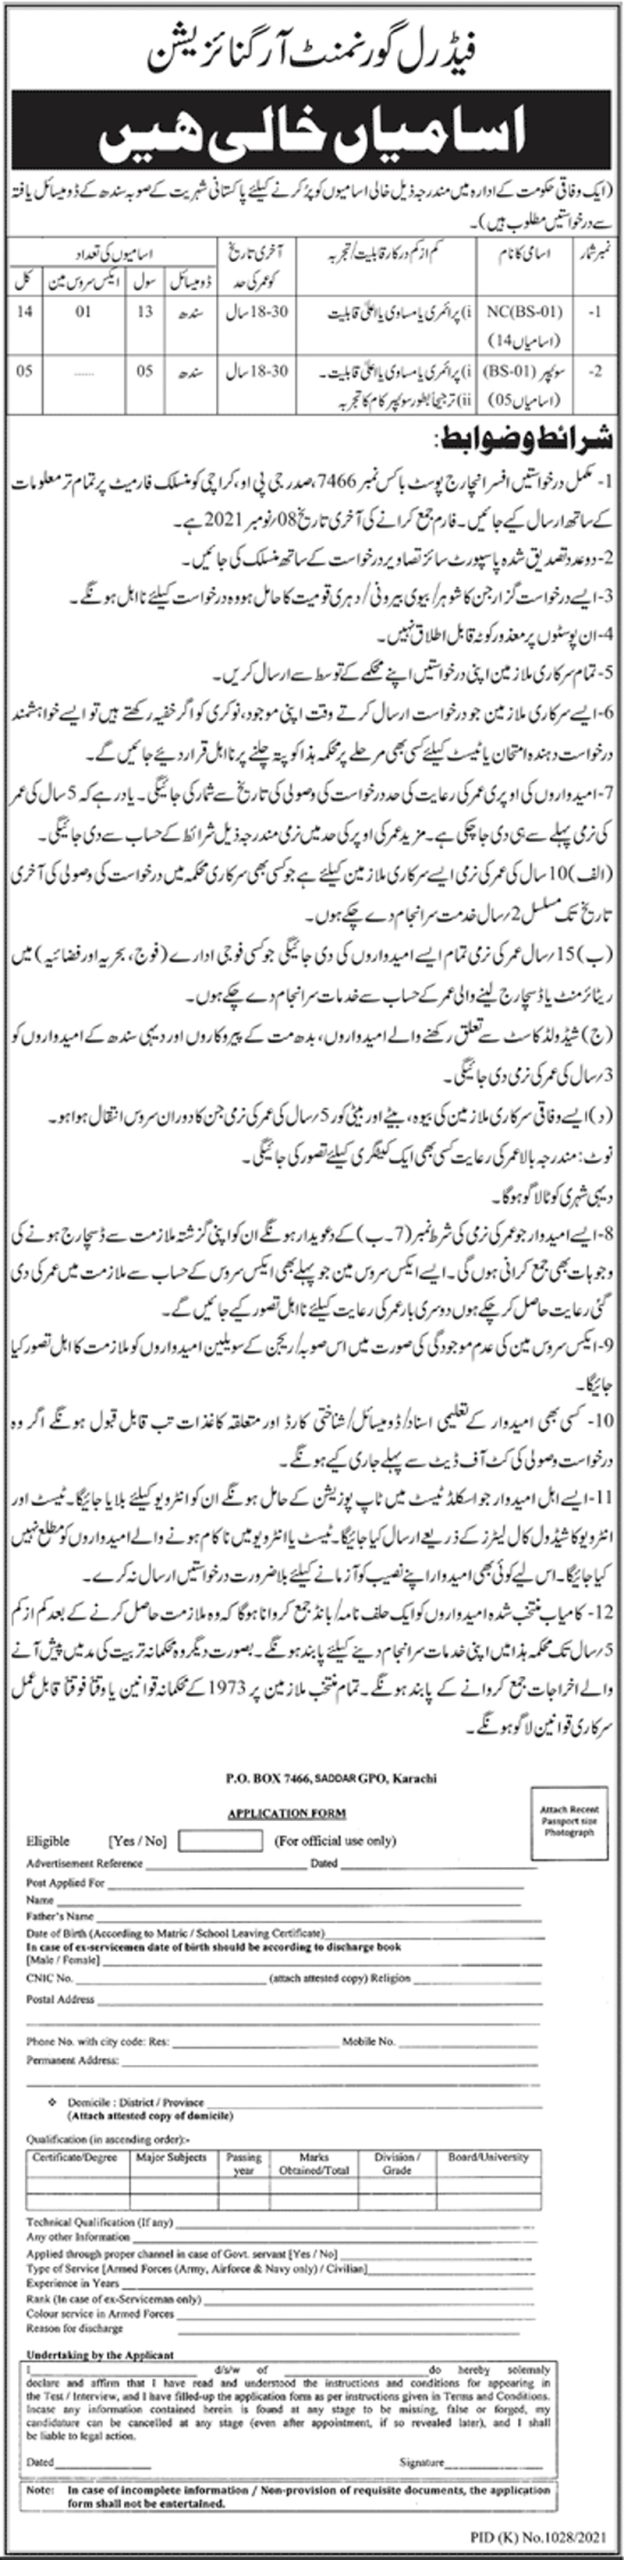 Federal Govt Organization Karachi Jobs